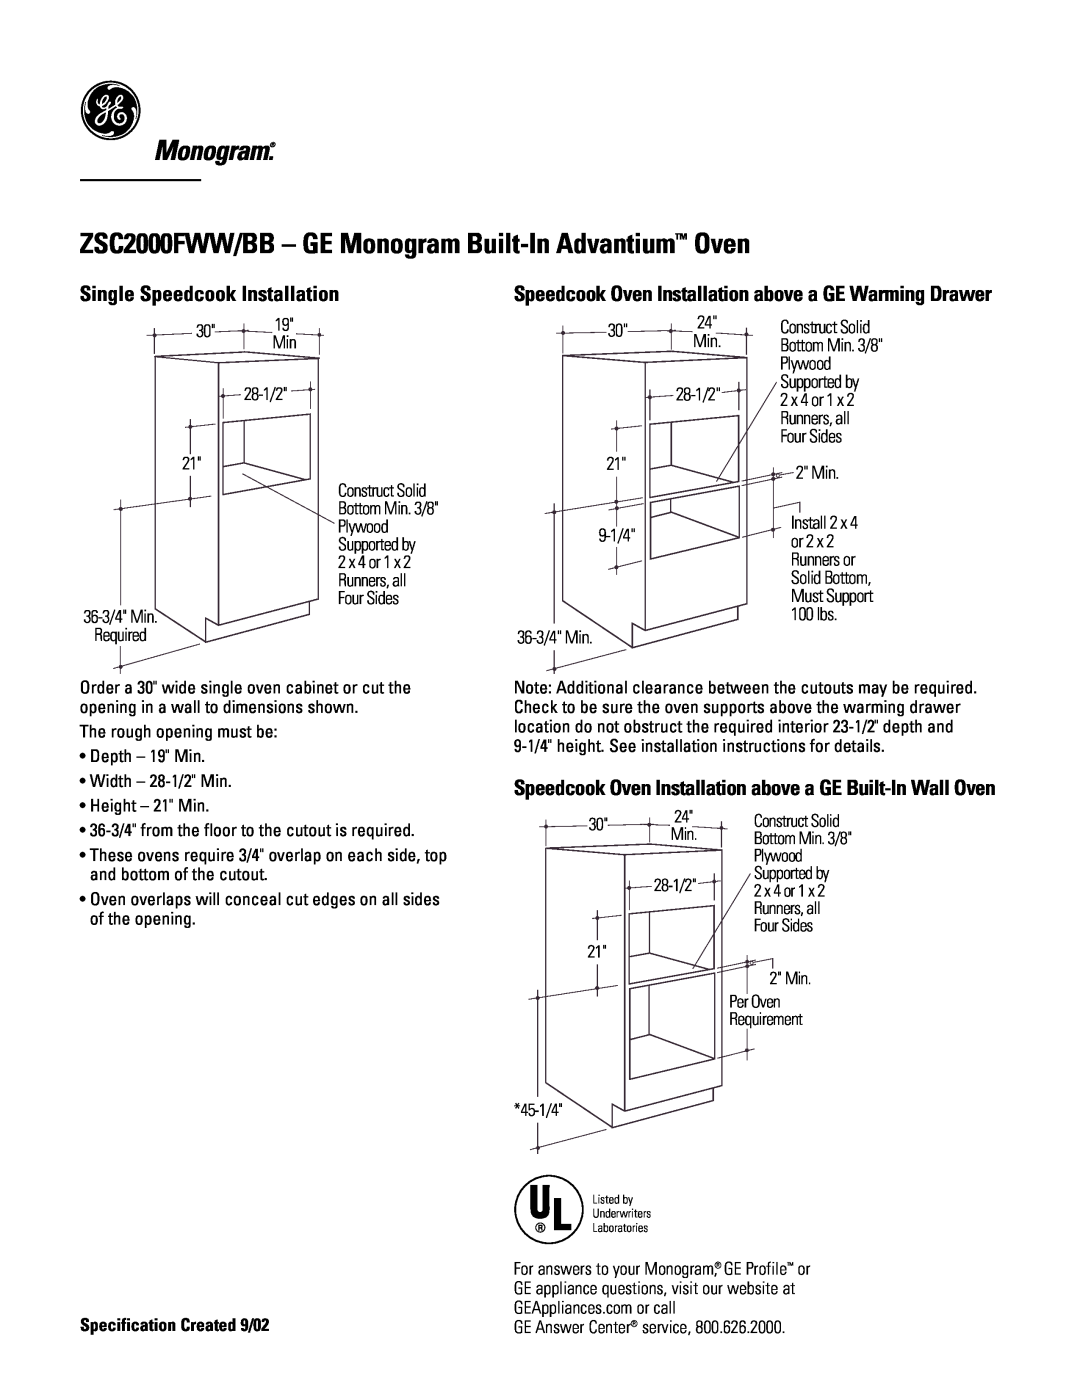 GE Monogram ZSC2000FWW/BB Single Speedcook Installation, 30 19 Min 28-1/2 21 Construct Solid, 36-3/4Min Required, 2 Min 